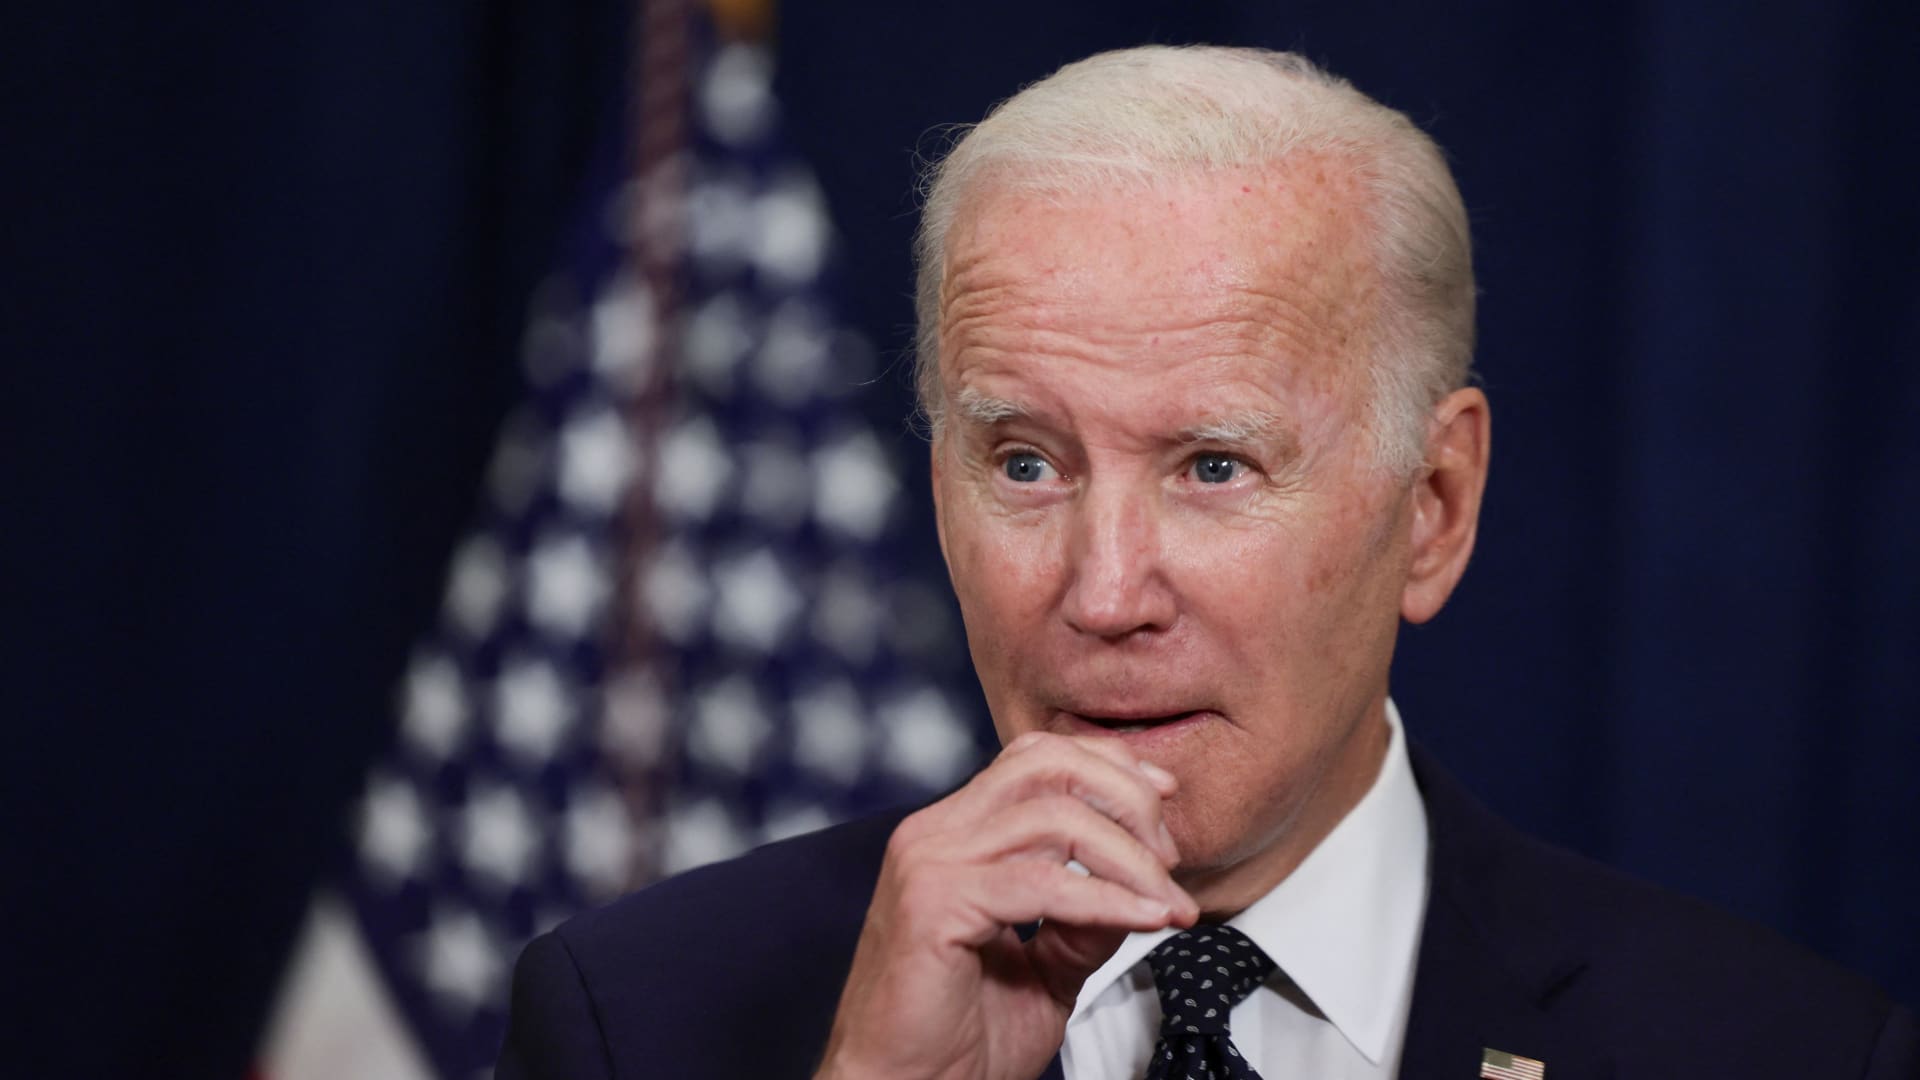 President Joe Biden job approval rating hits new low in public poll